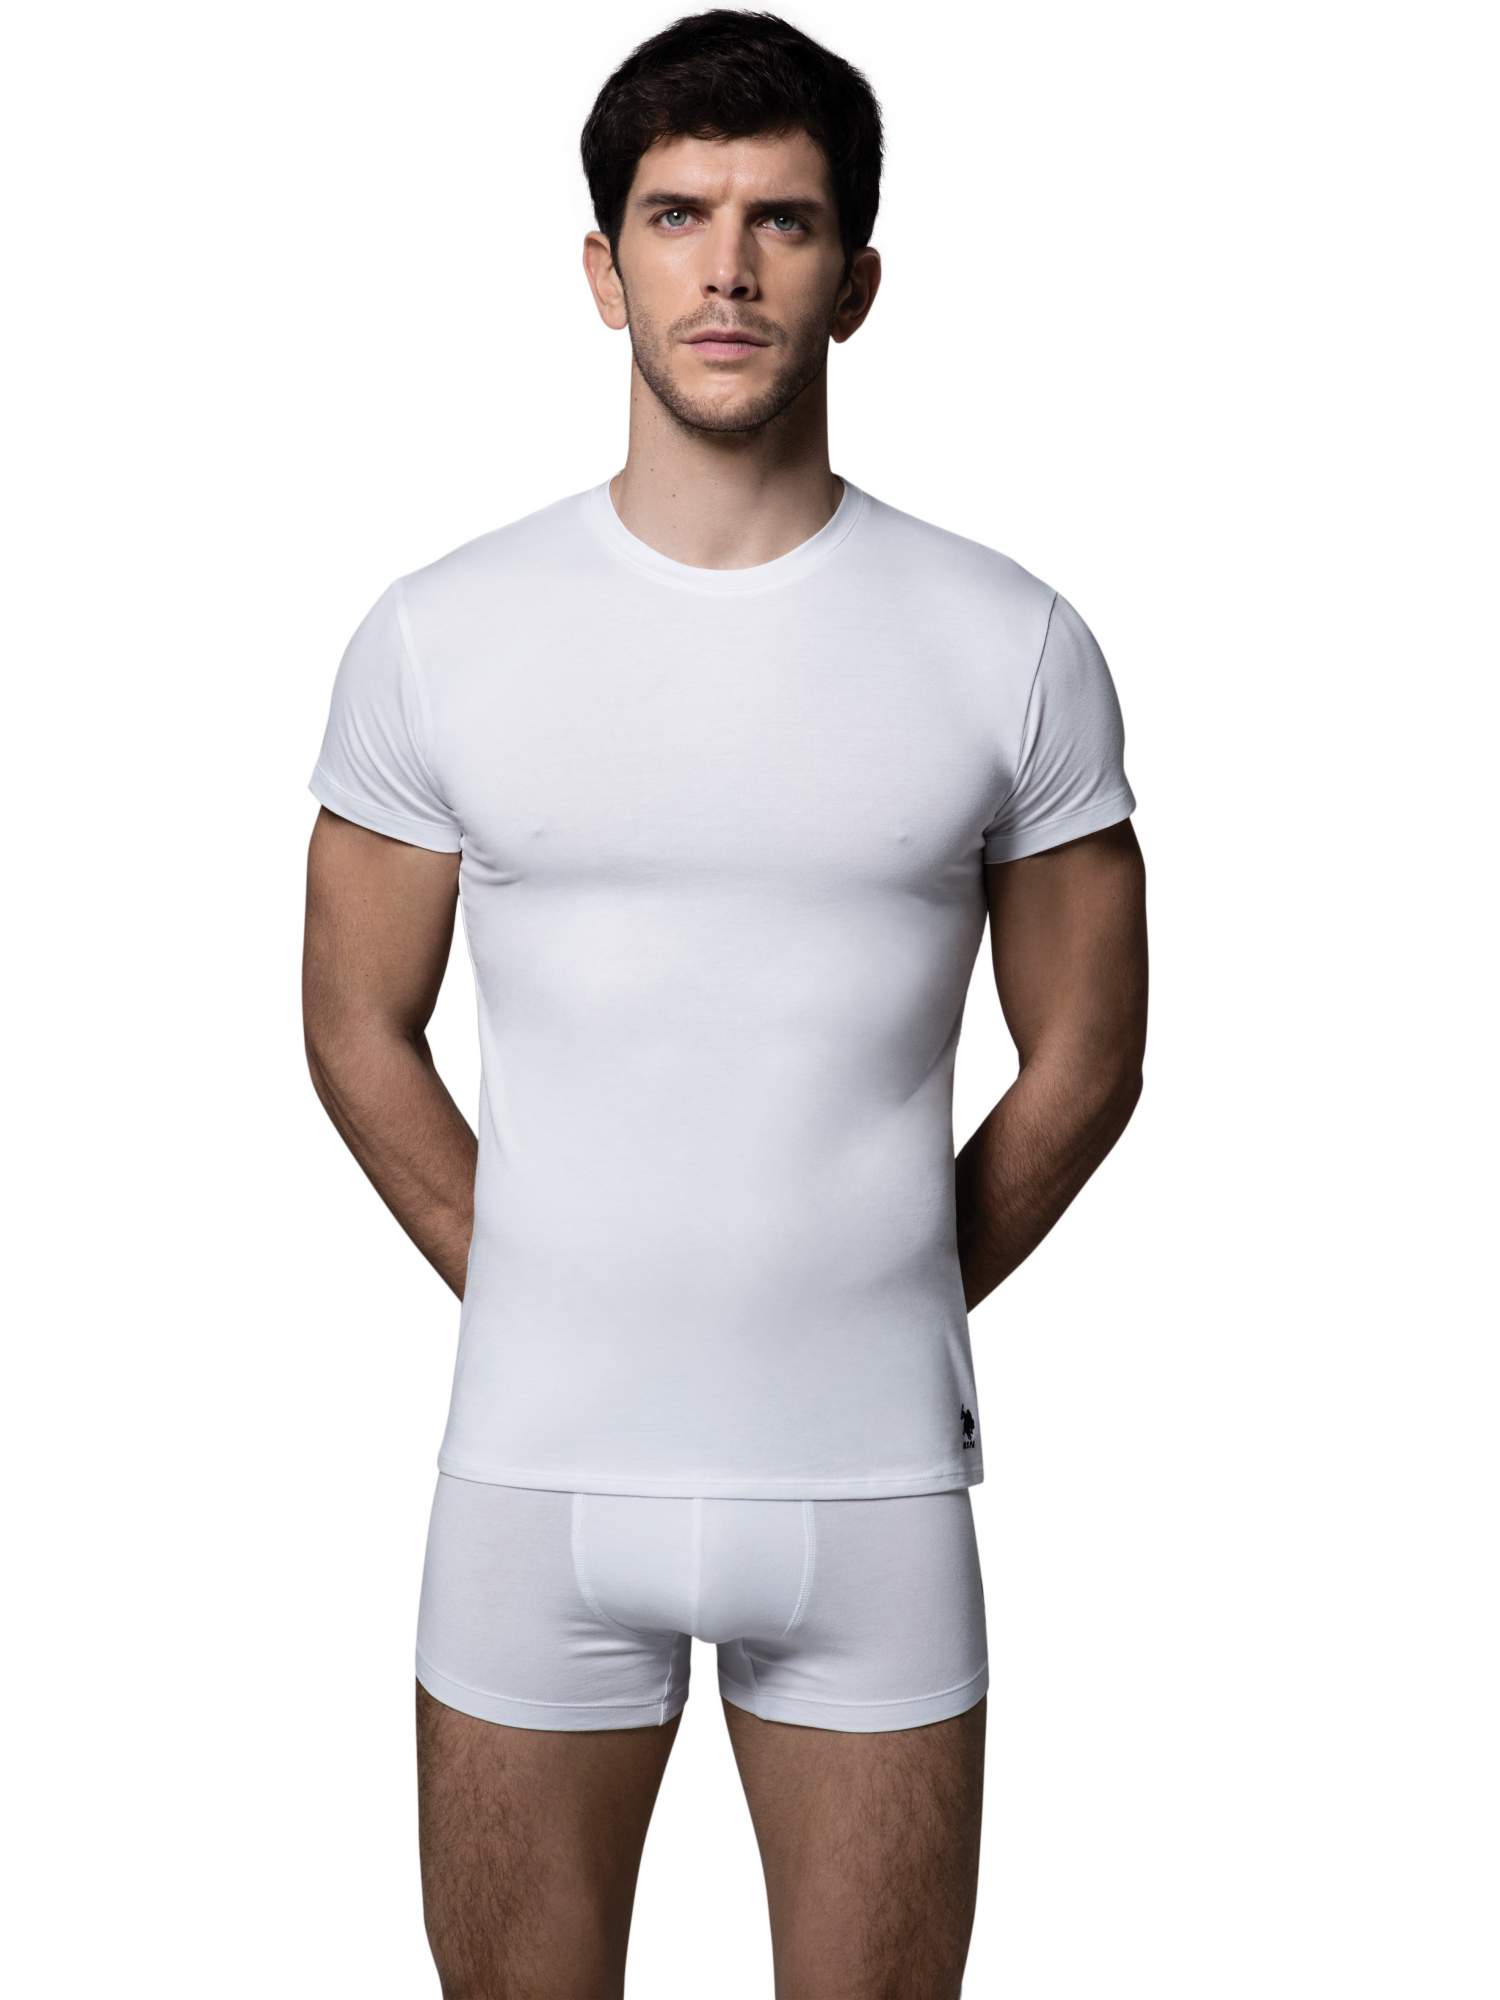 Комплект футболок мужских U.S. POLO Assn. 80197 белых XXL